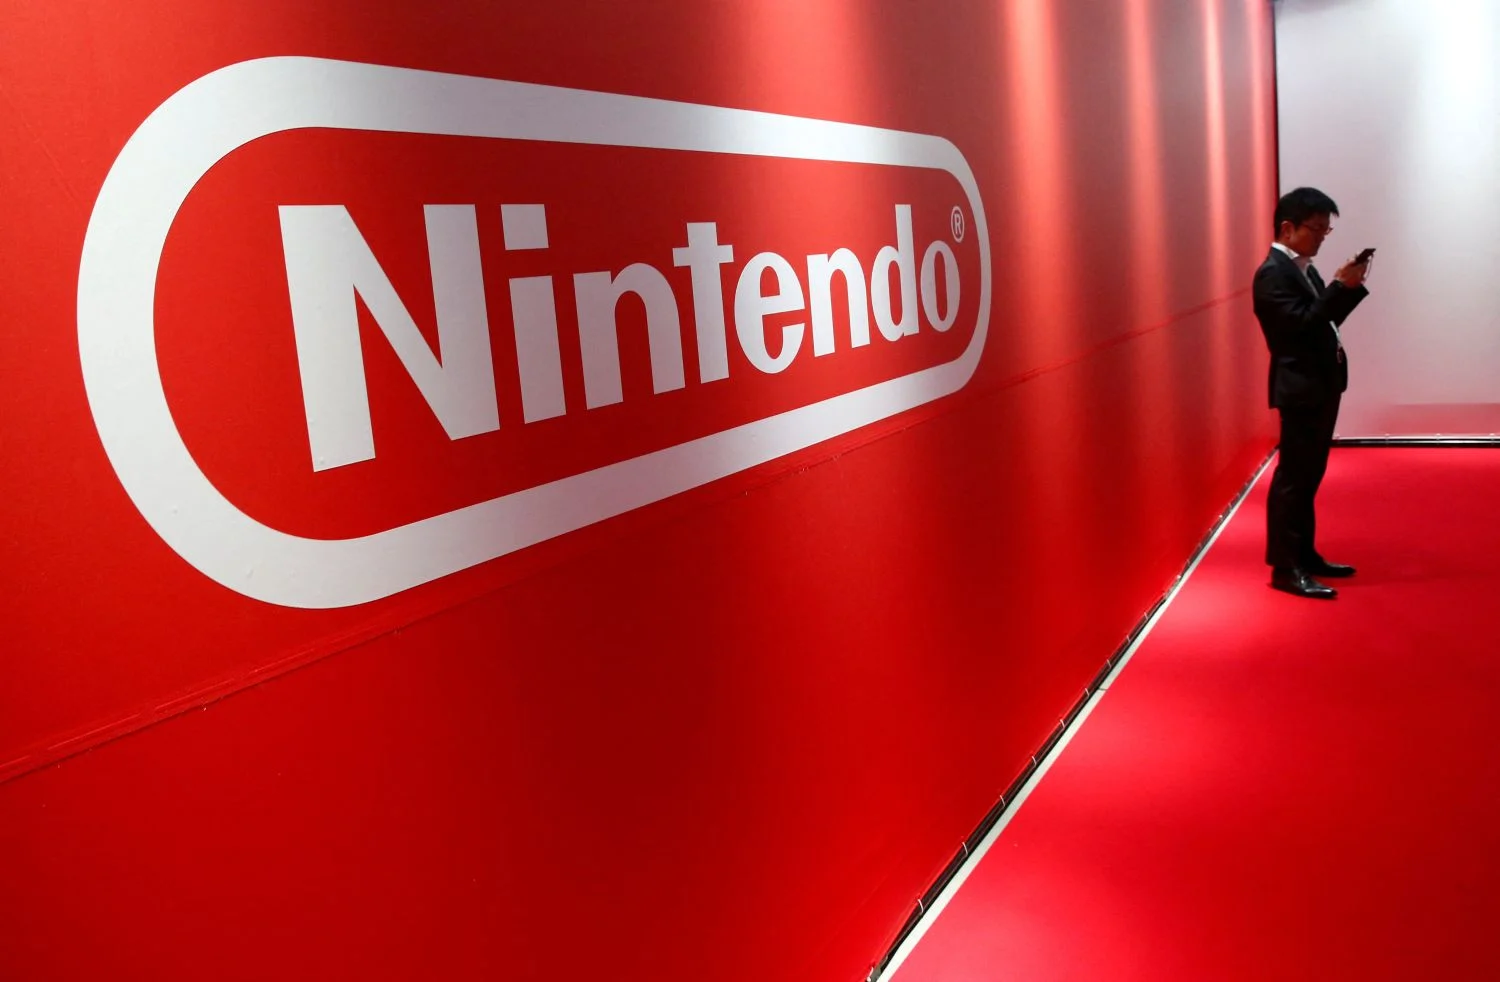 Nintendo logo1